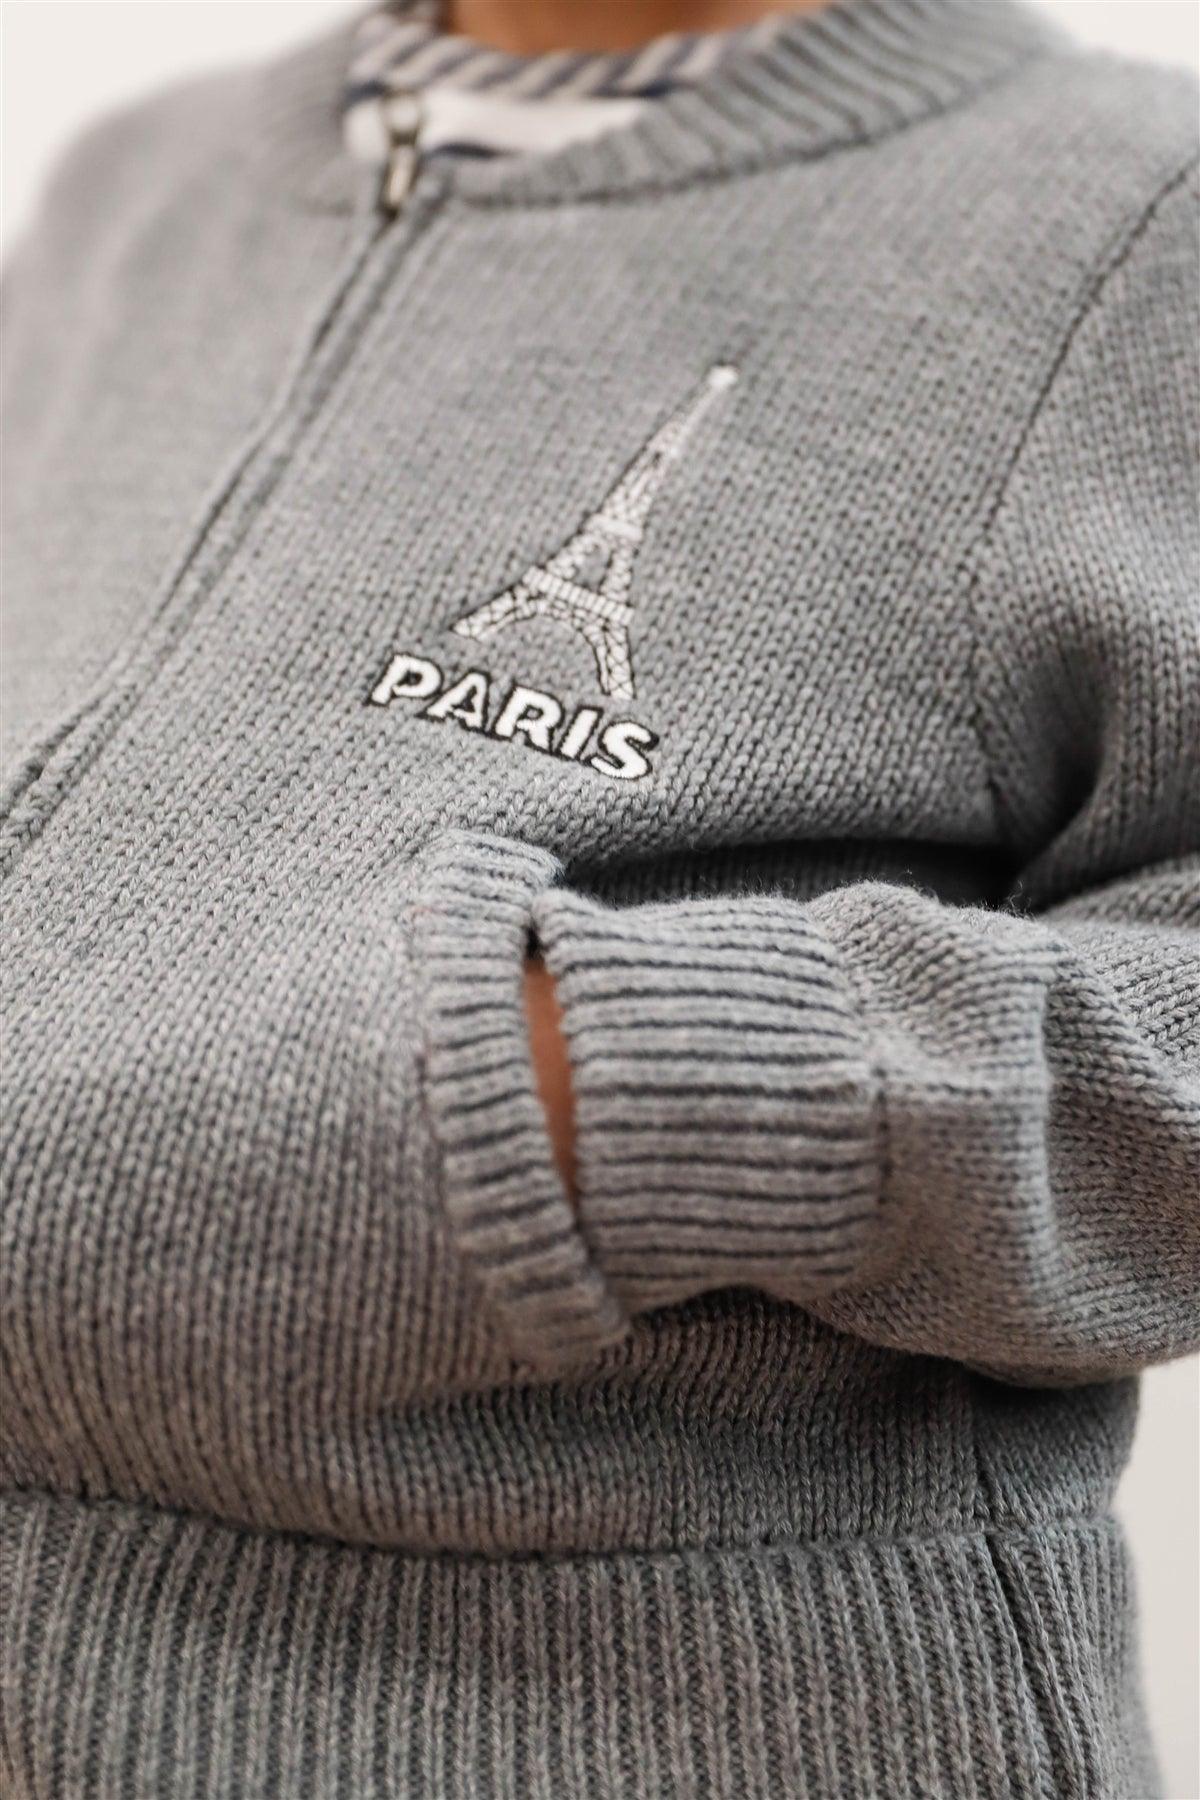 Girls "Paris" Grey Knit Cotton Zip-Up Sweater /5-1